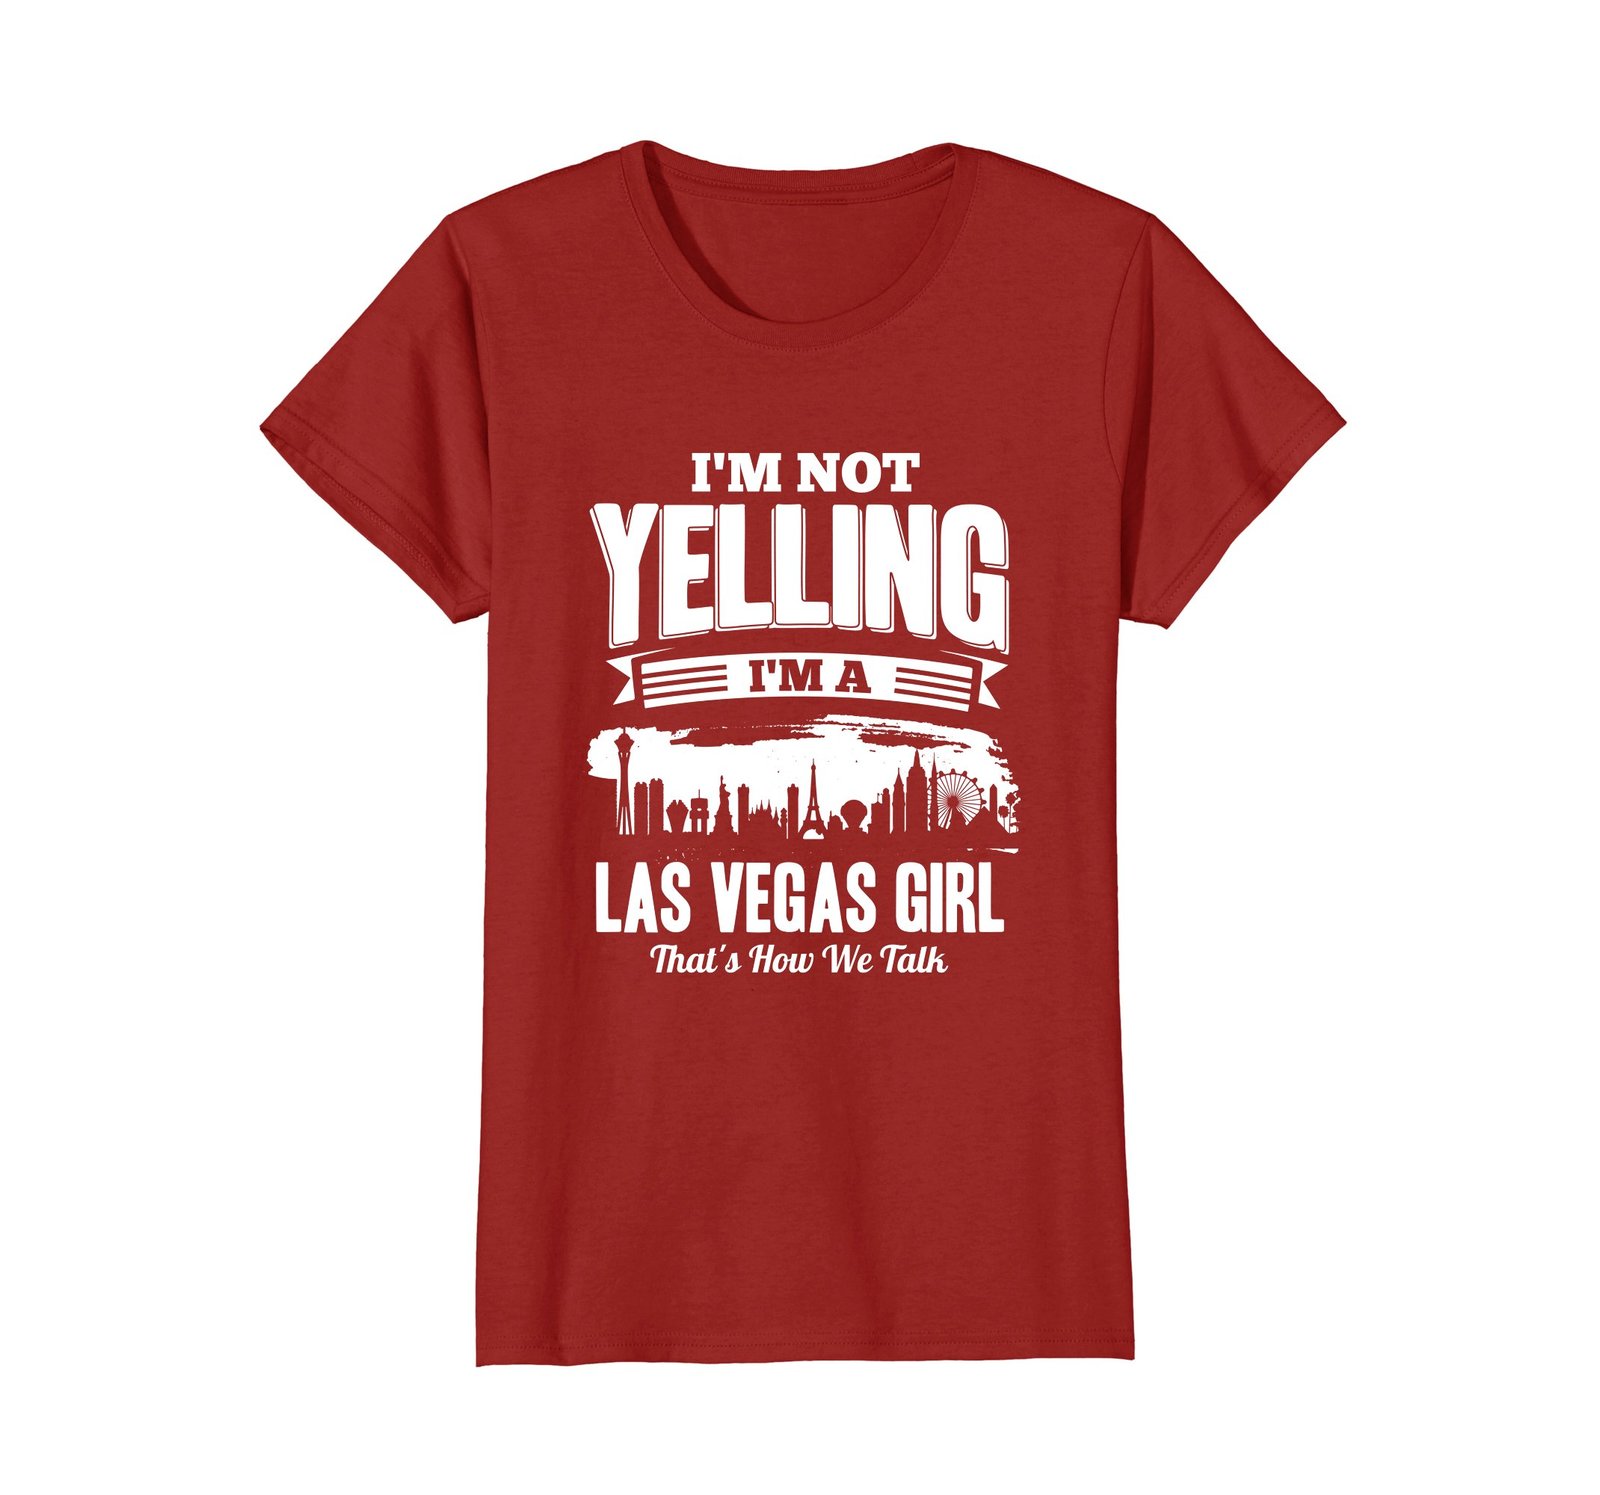 Funny Shirts - I'M NOT YELLING I'M A Las Vegas GIRL T-shirt Wowen